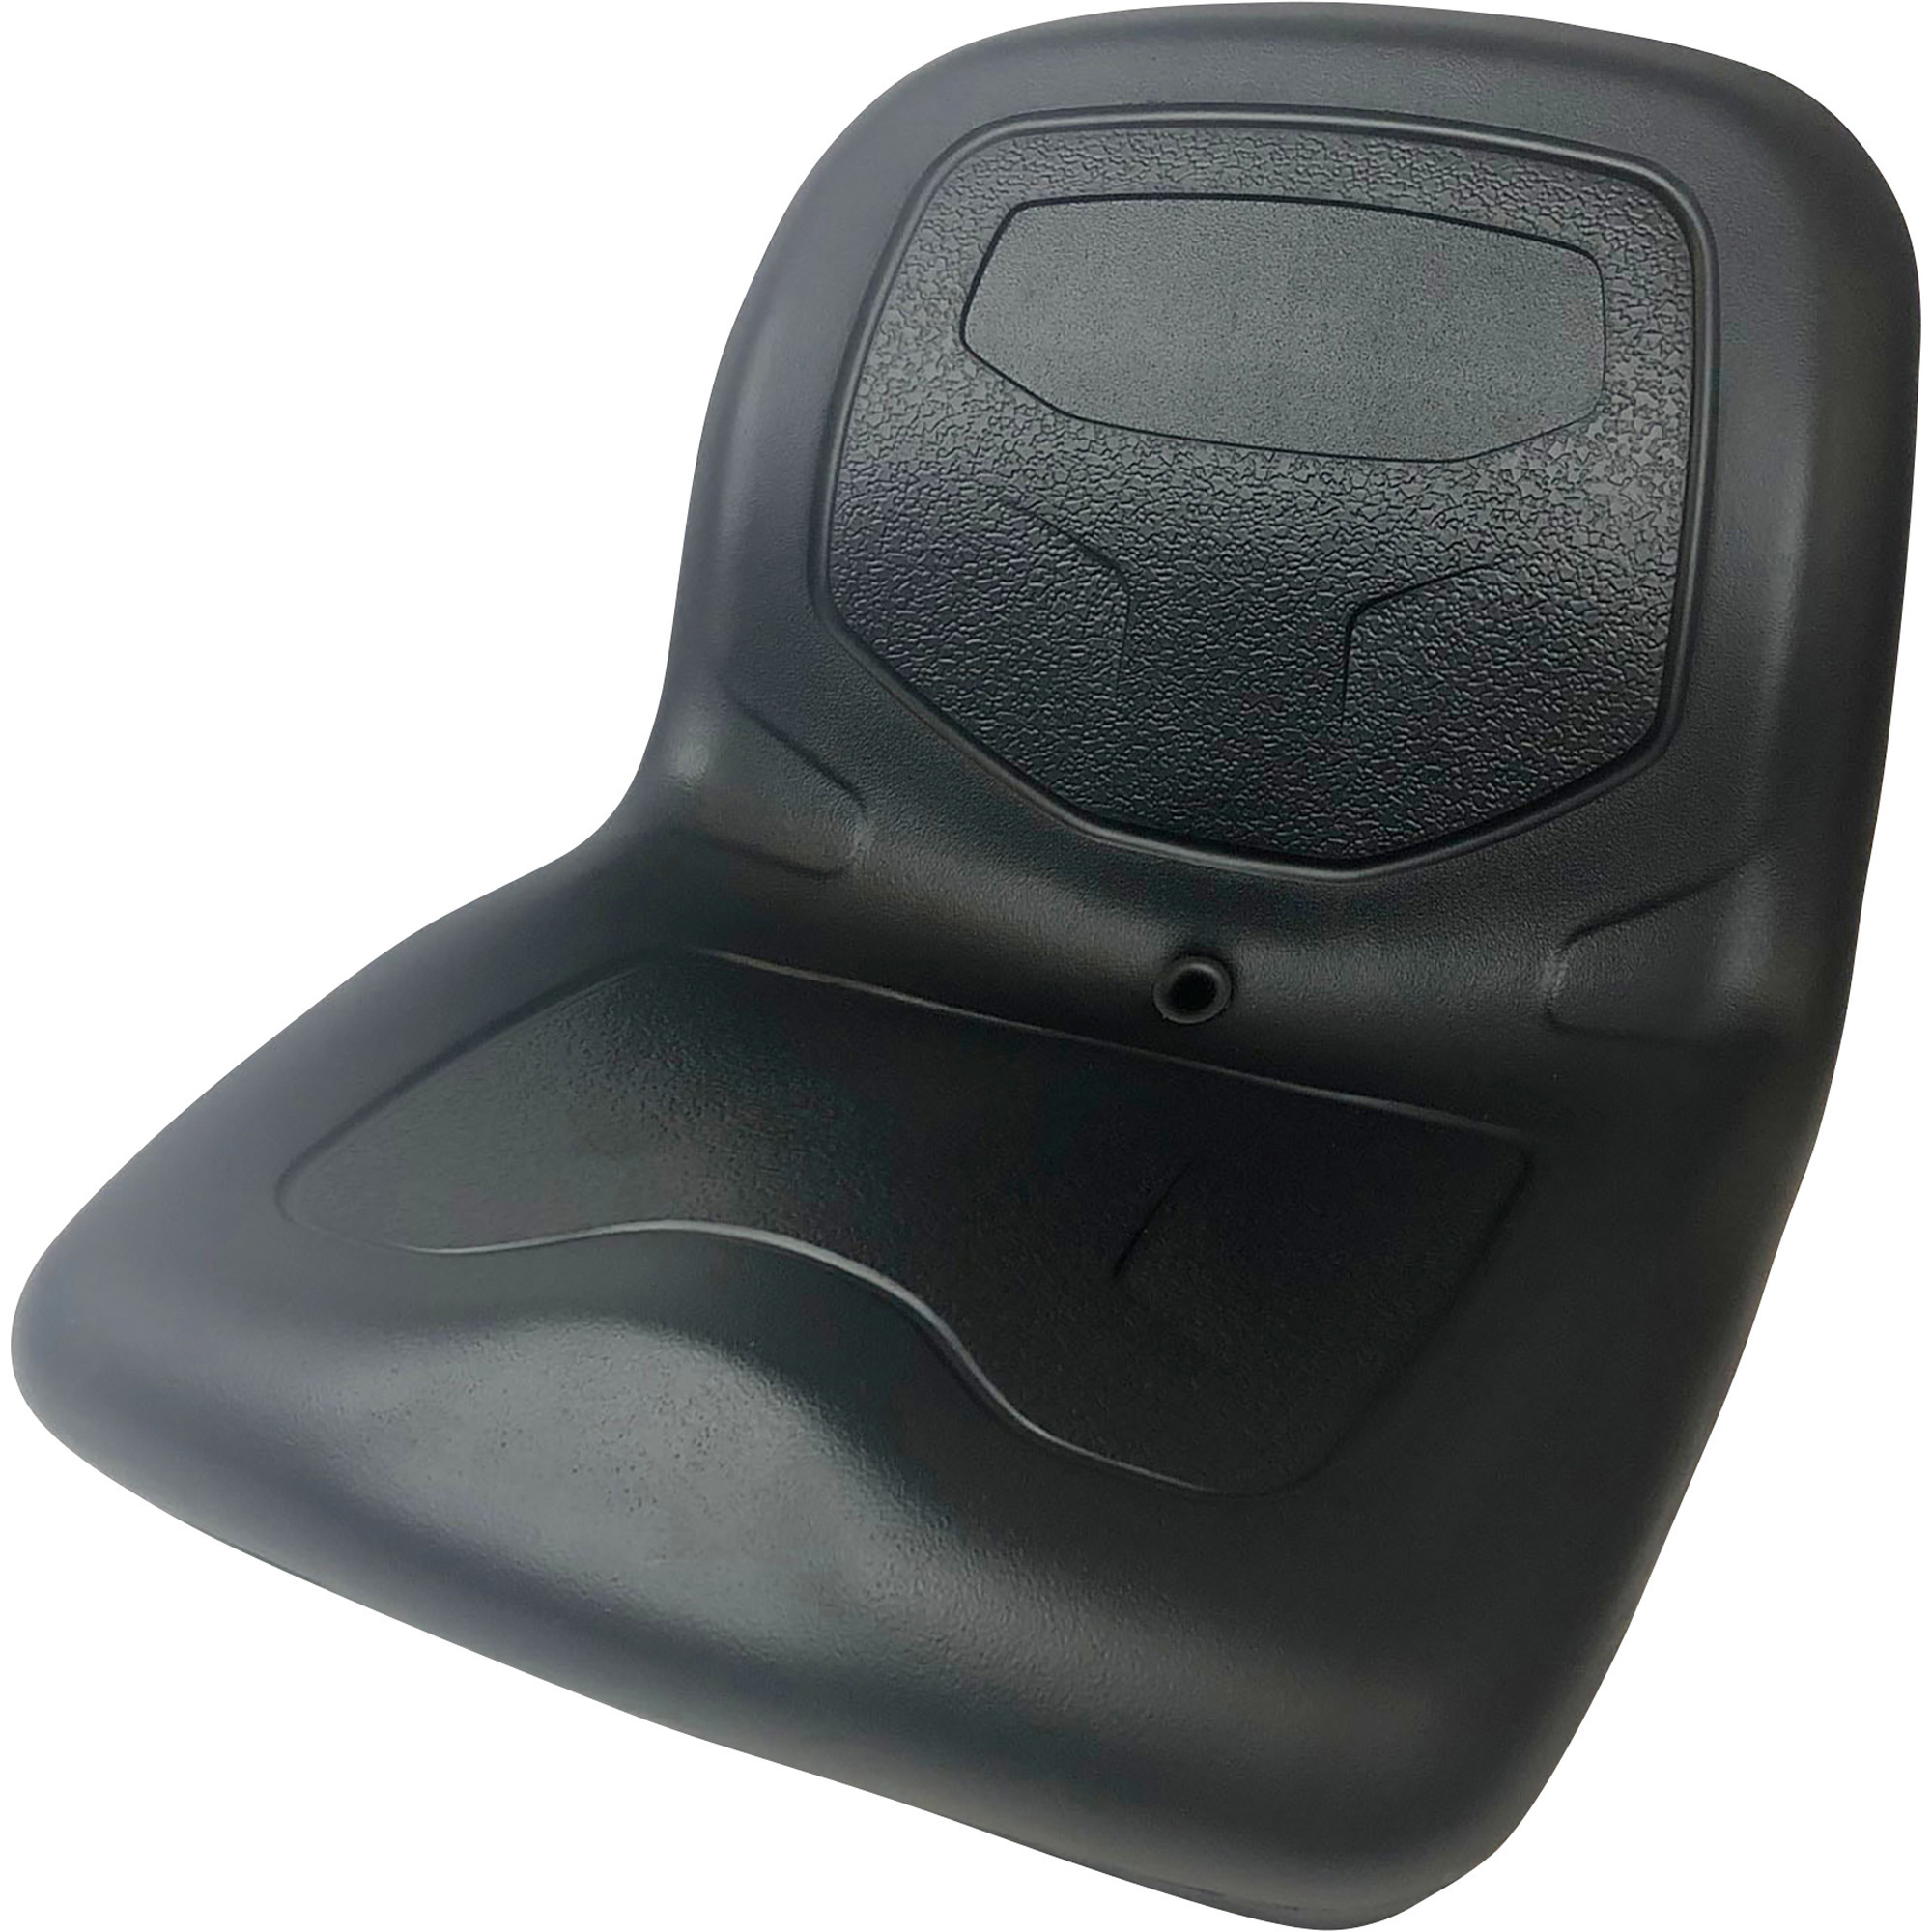 Milsco TS3500 Mid-Back Universal Lawn Mower Seat, Black, Model S935021AB